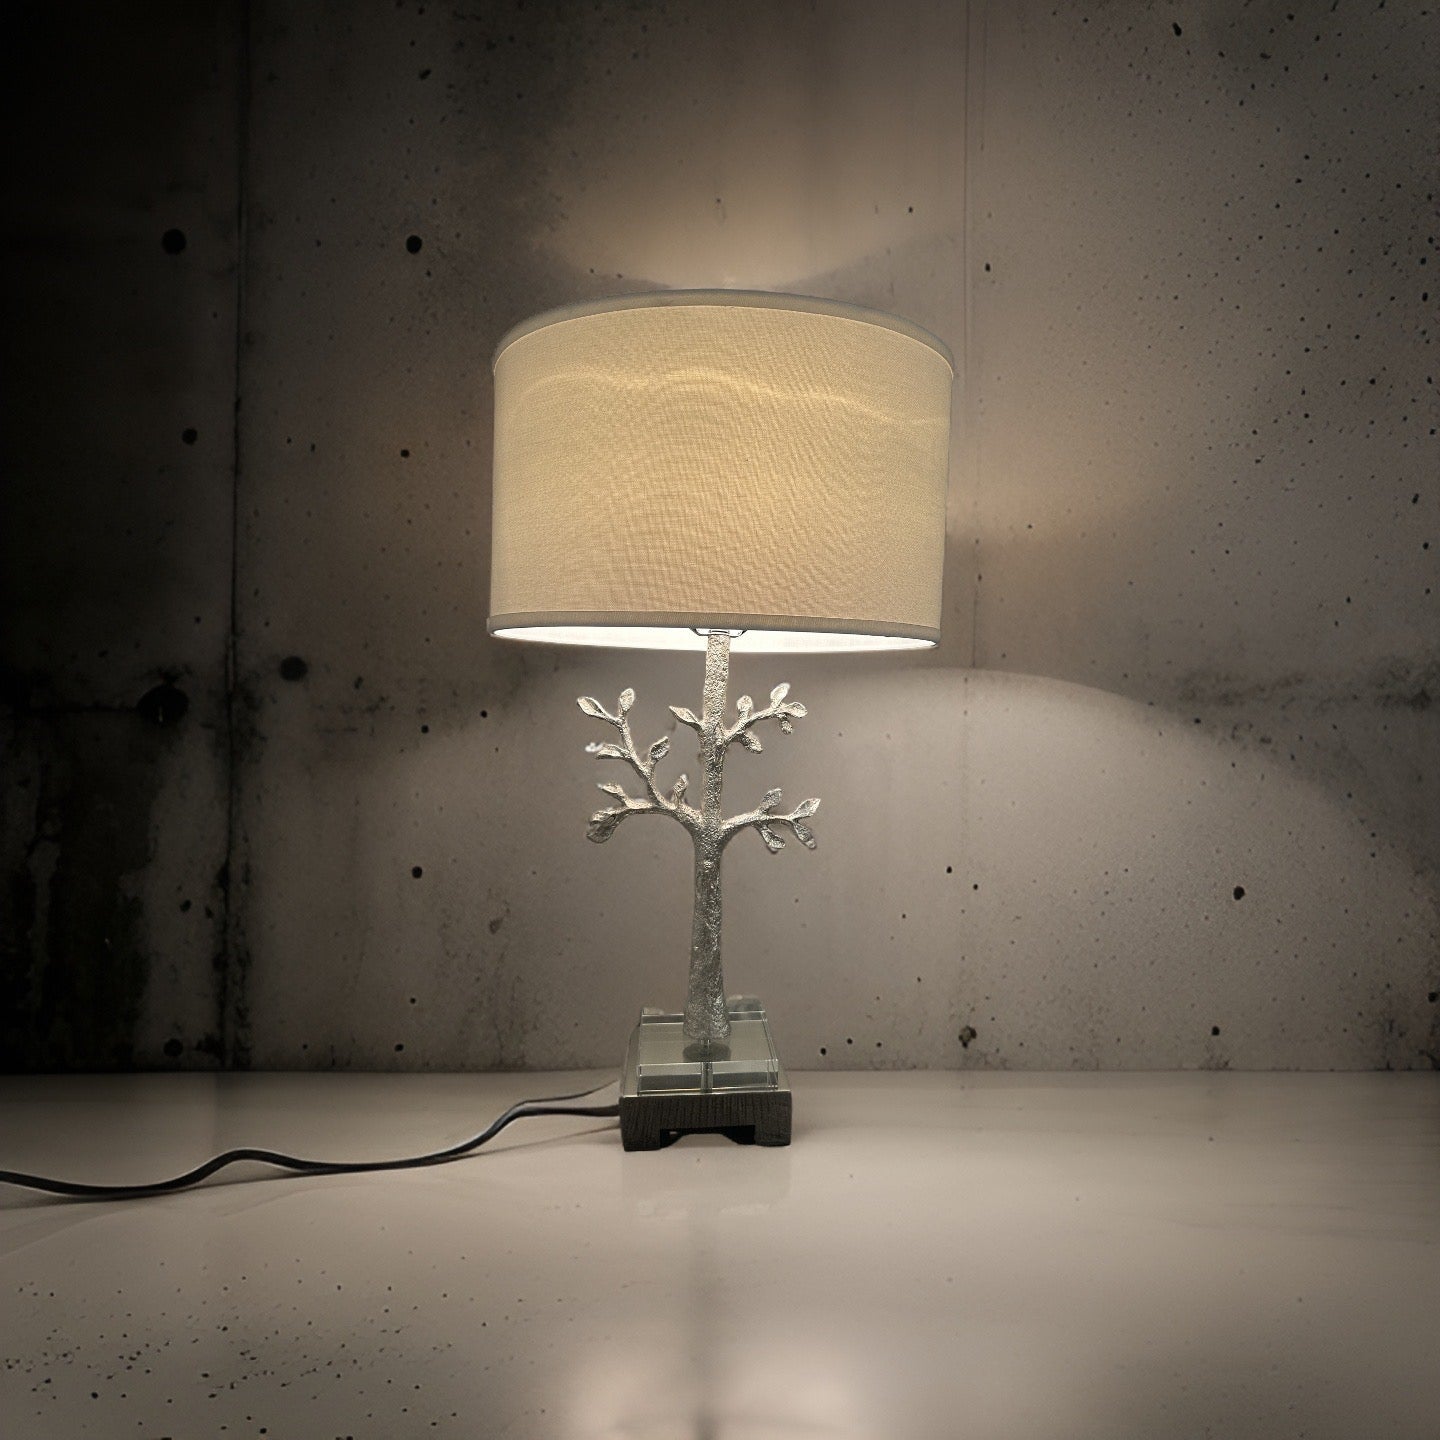 HLHF Silver Tree Table Lamp (505548) Lighting Furniture Store Burlington Ontario Near Me 